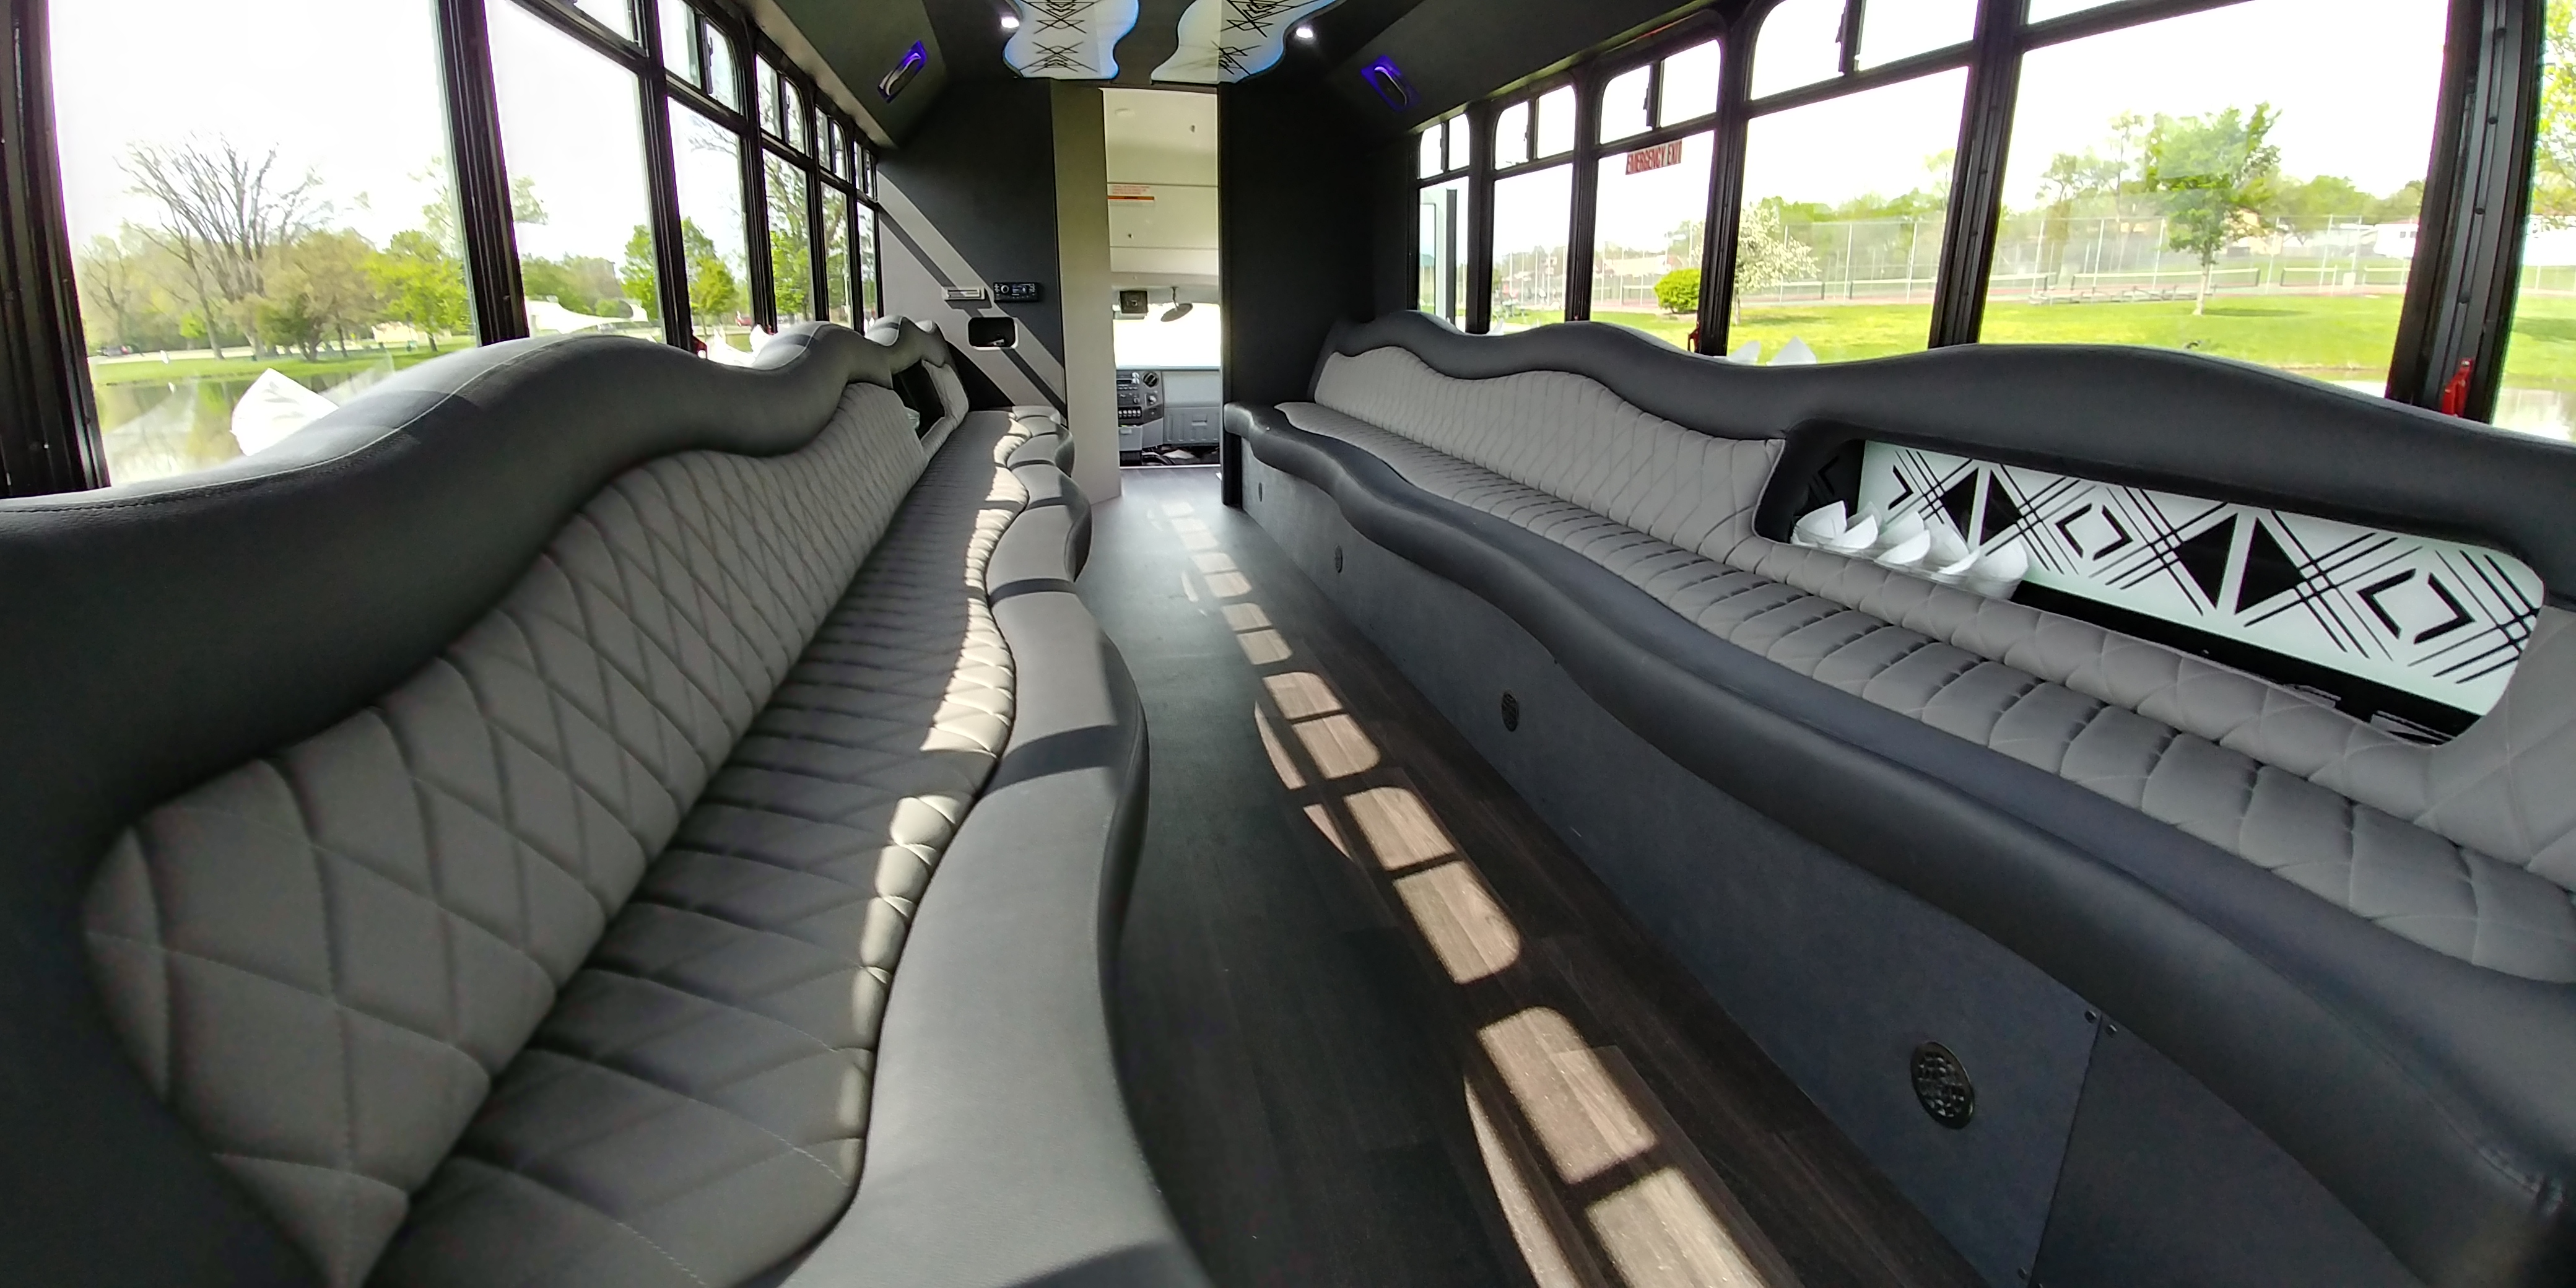 28 Passenger Luxury Limo Bus Interior 9